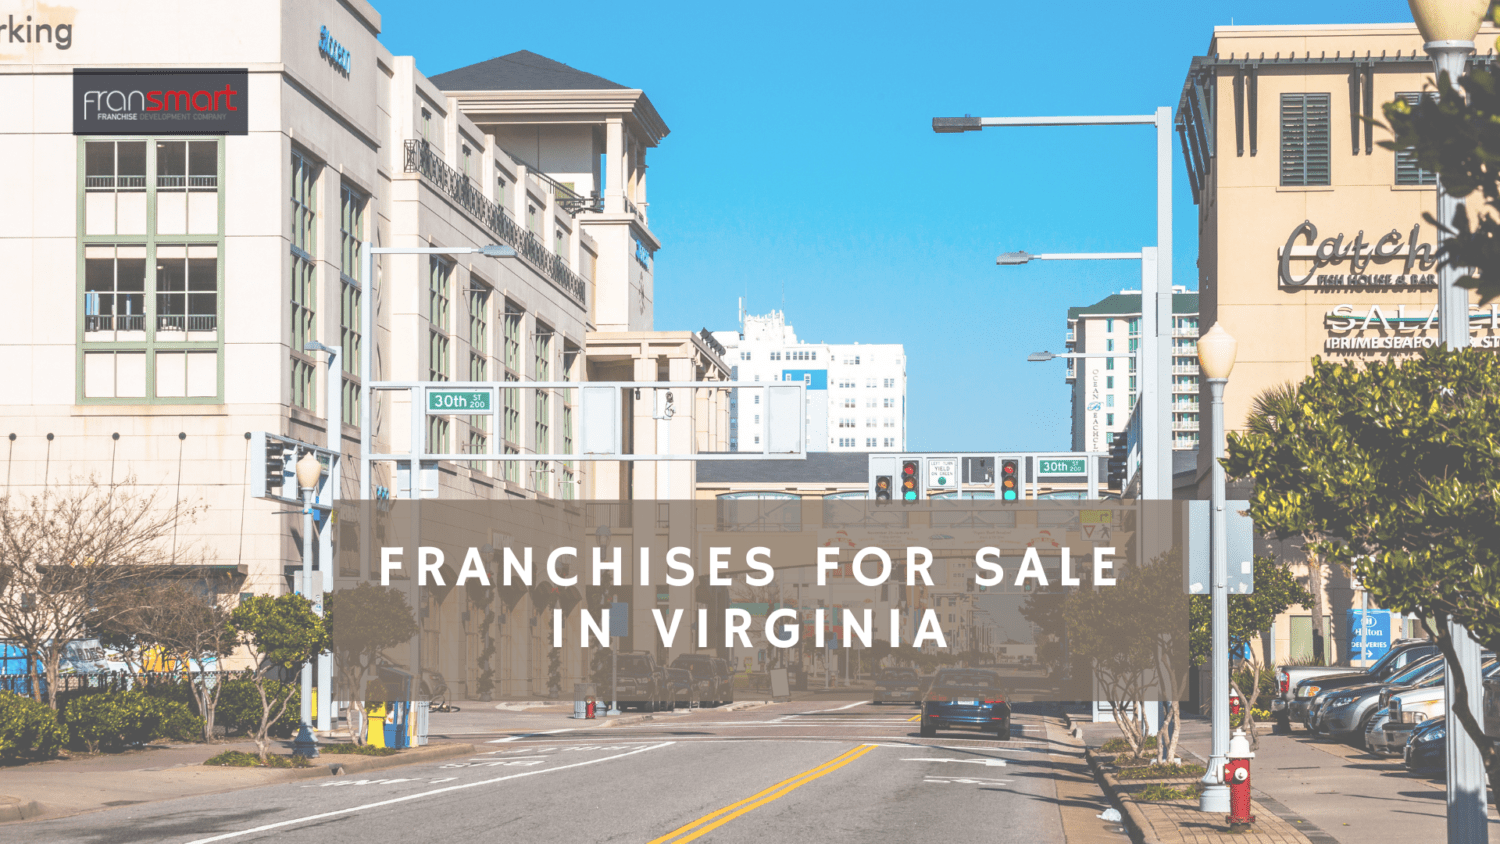 Franchises For Sale in Virginia